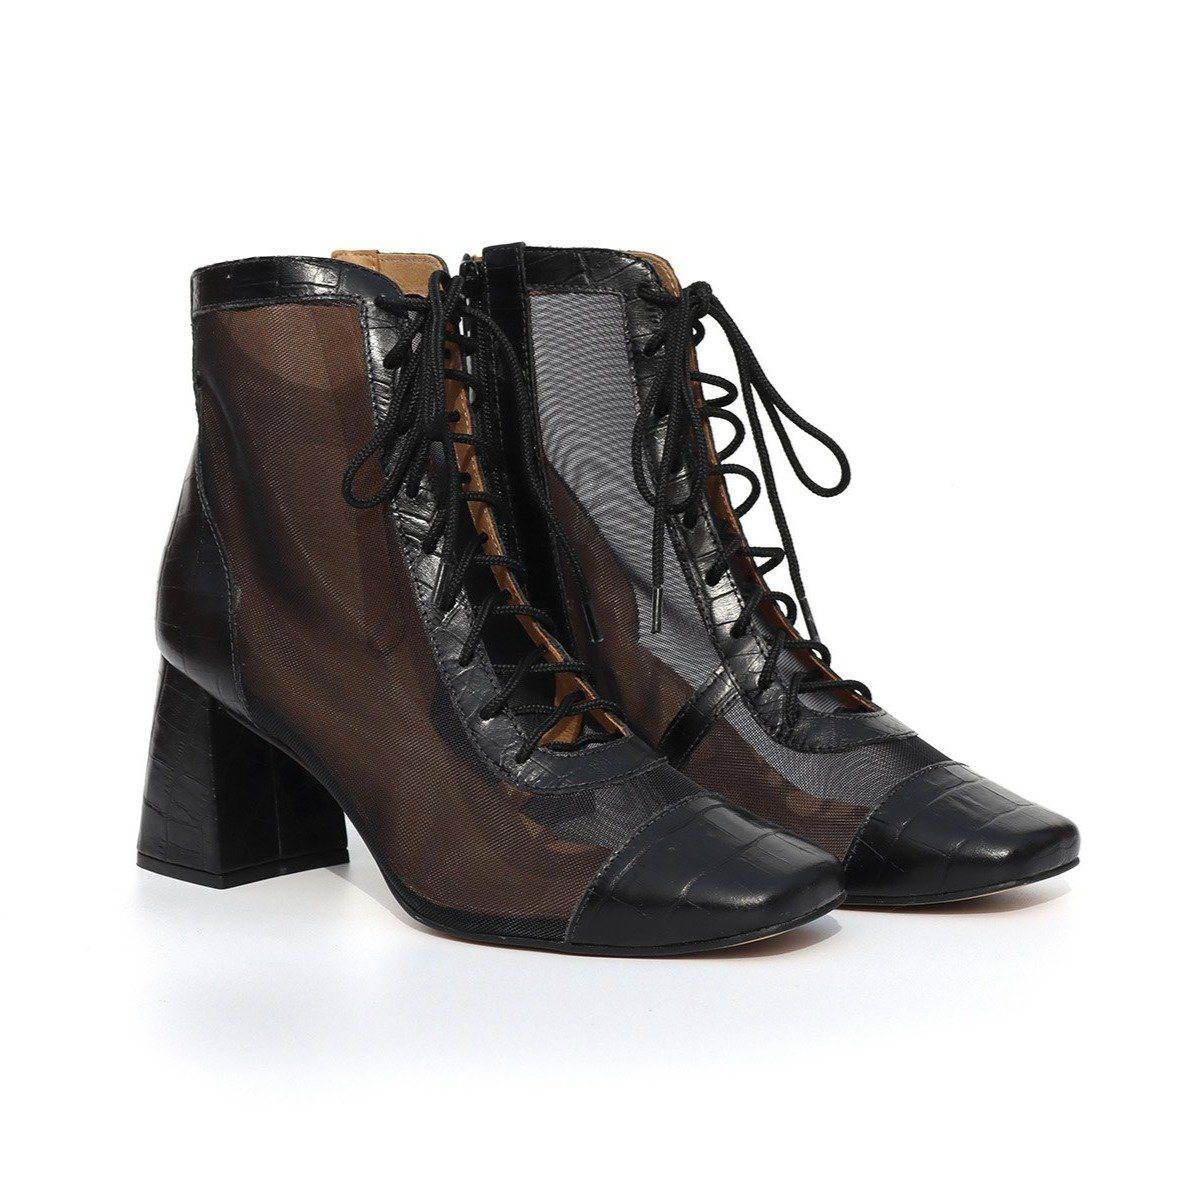 Giselle Black Ankle Boot - Juliana Heels 